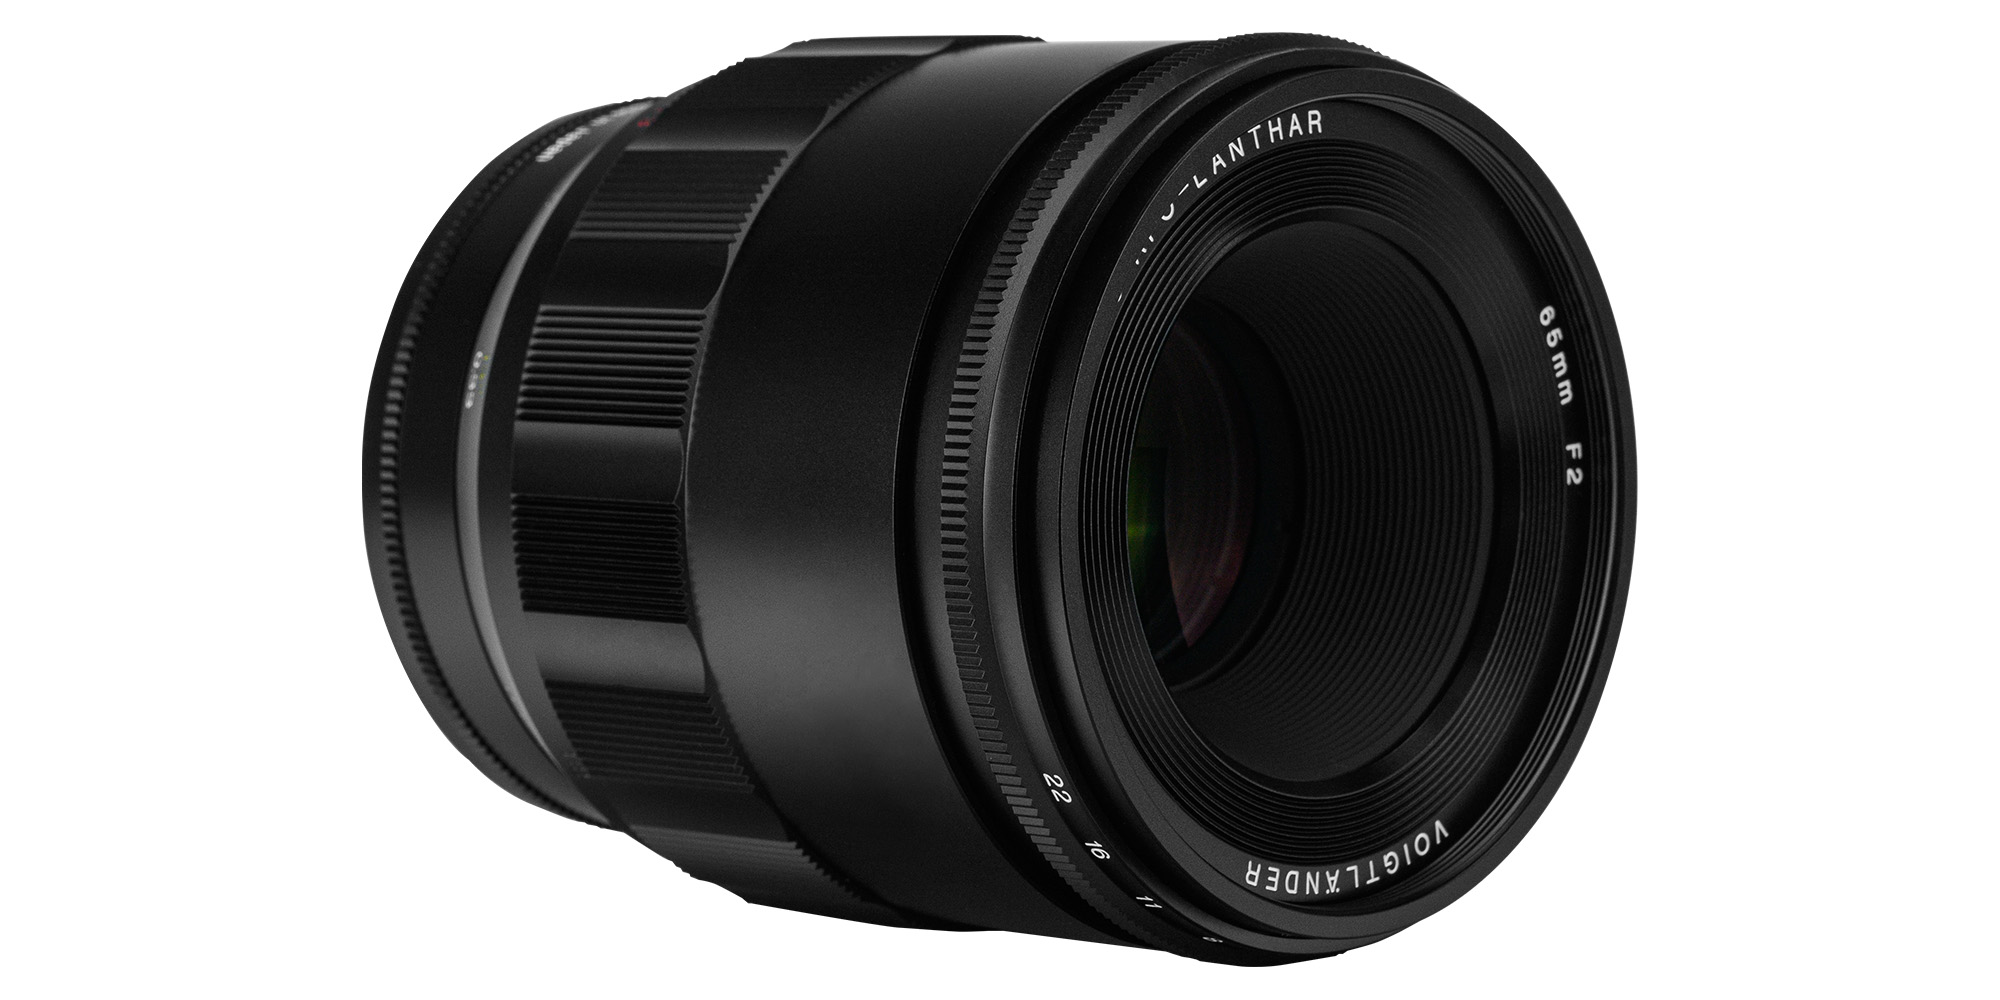 Voigtlander Macro APO Lanthar 65 mm f/2.0 lens for Nikon Z - Short tele